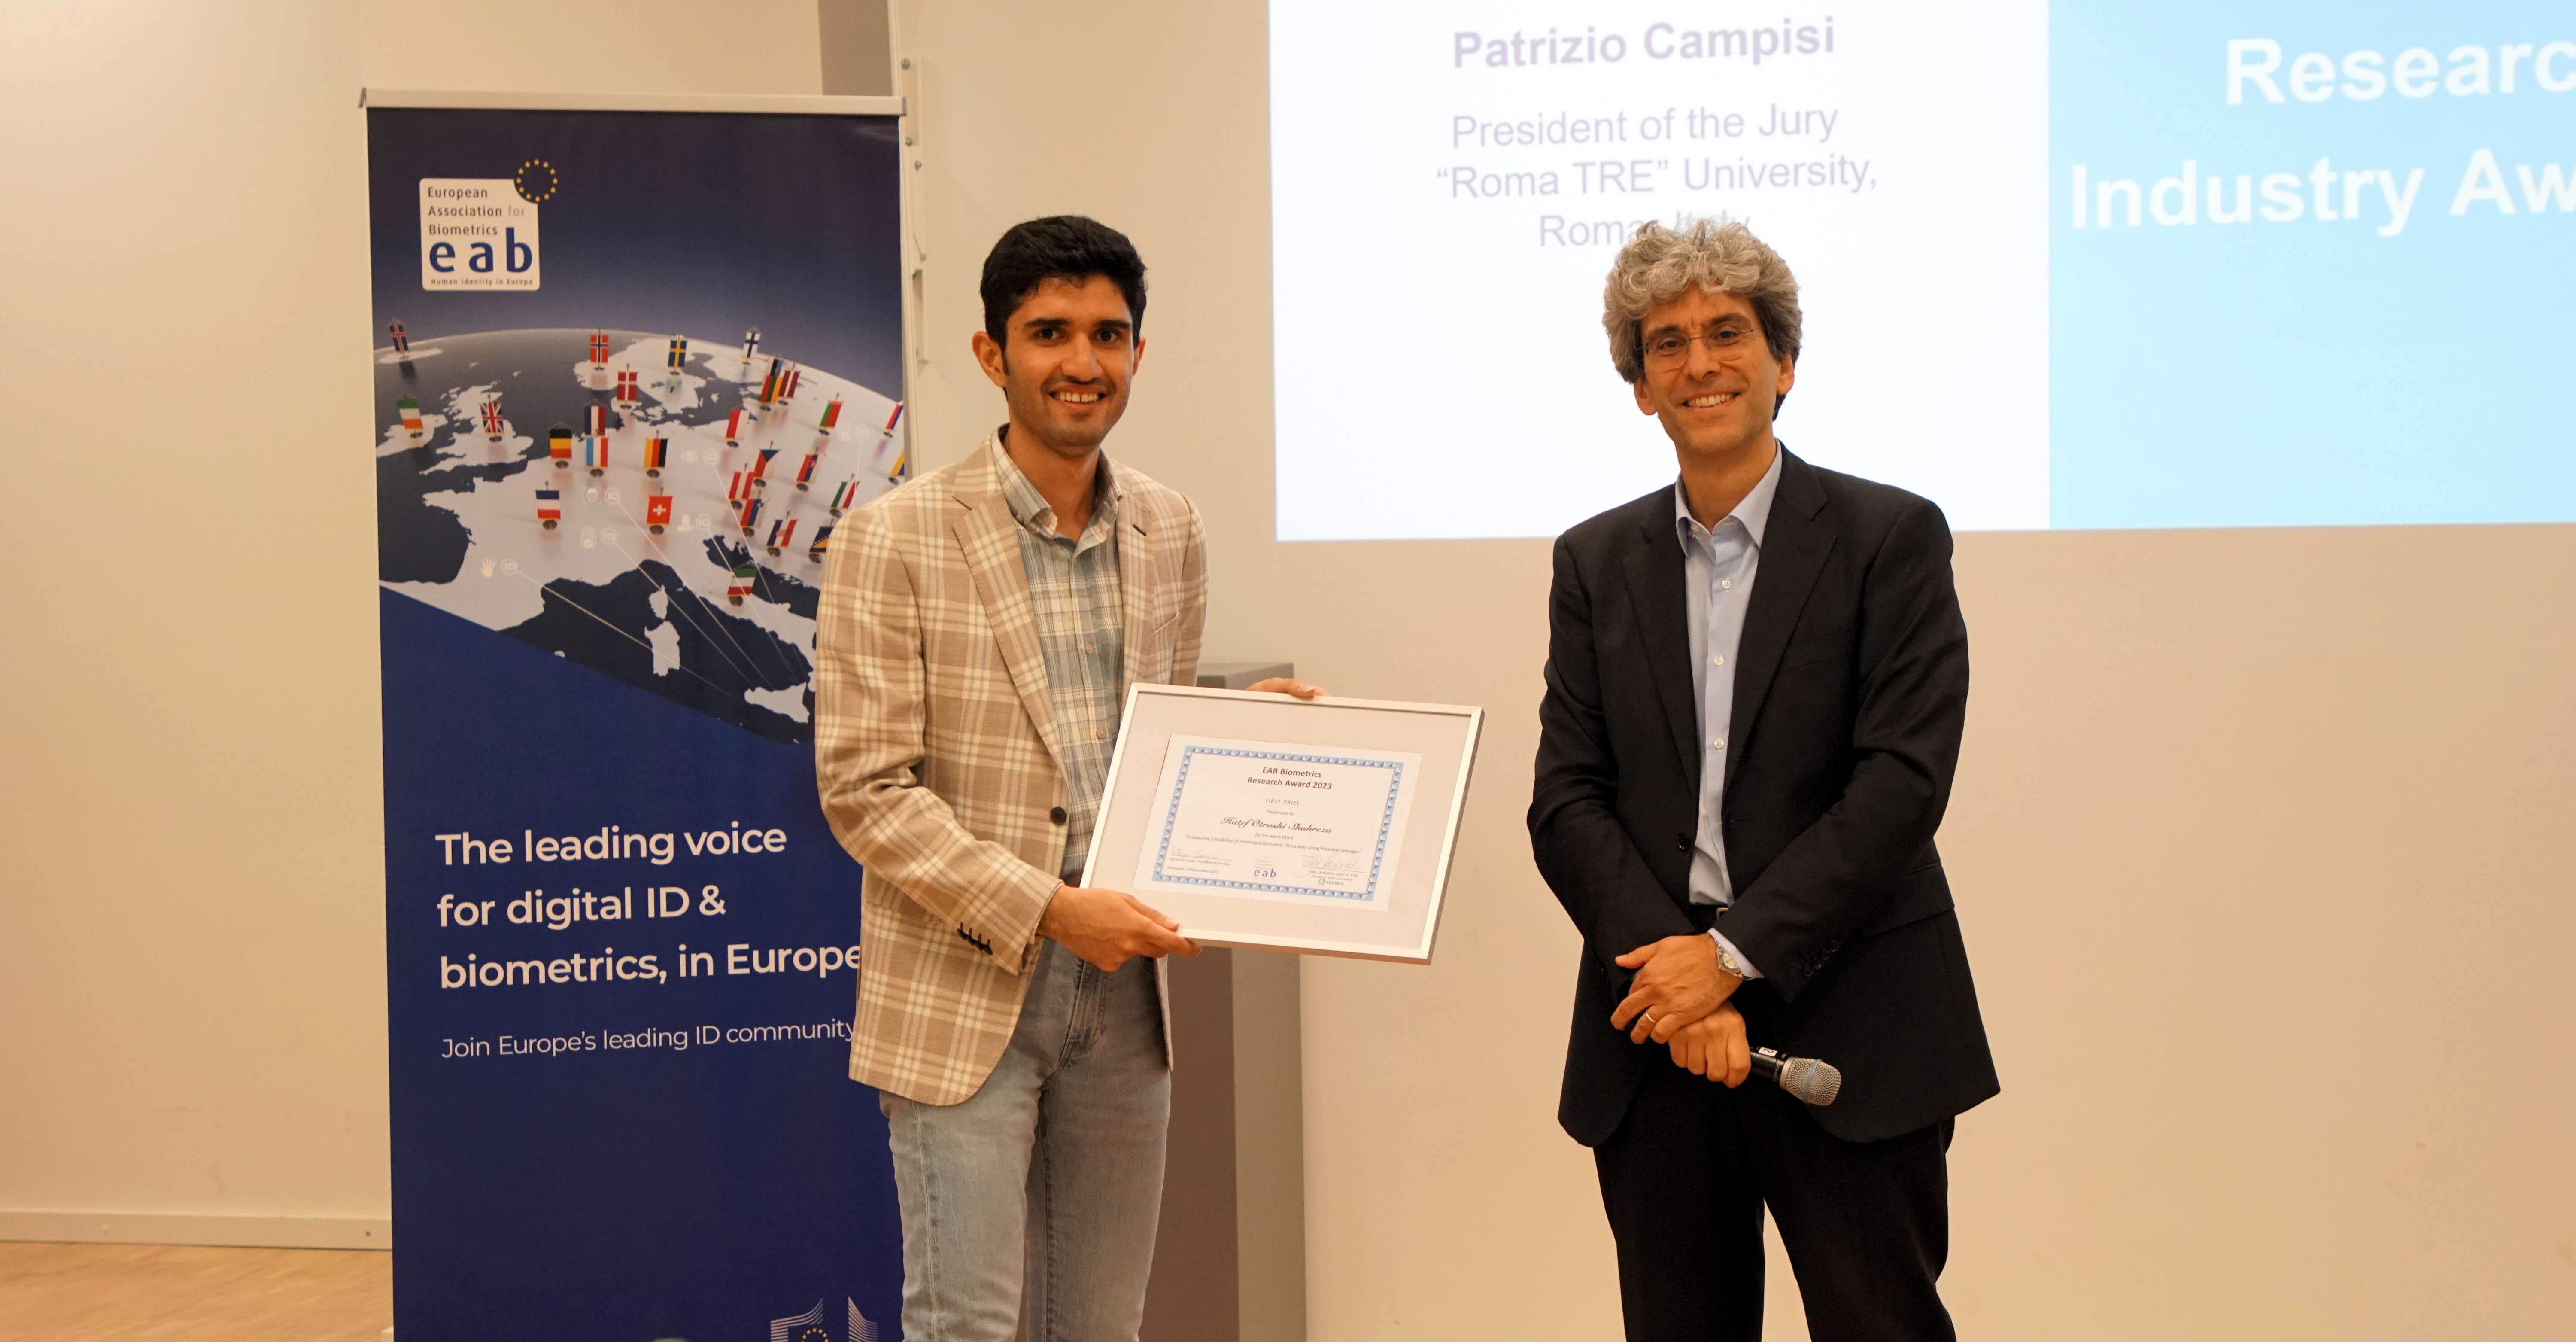 [Photo] Winner of the EAB Research Award Hatef Otroshi Shahreza with awards chair Patrizio Campisi